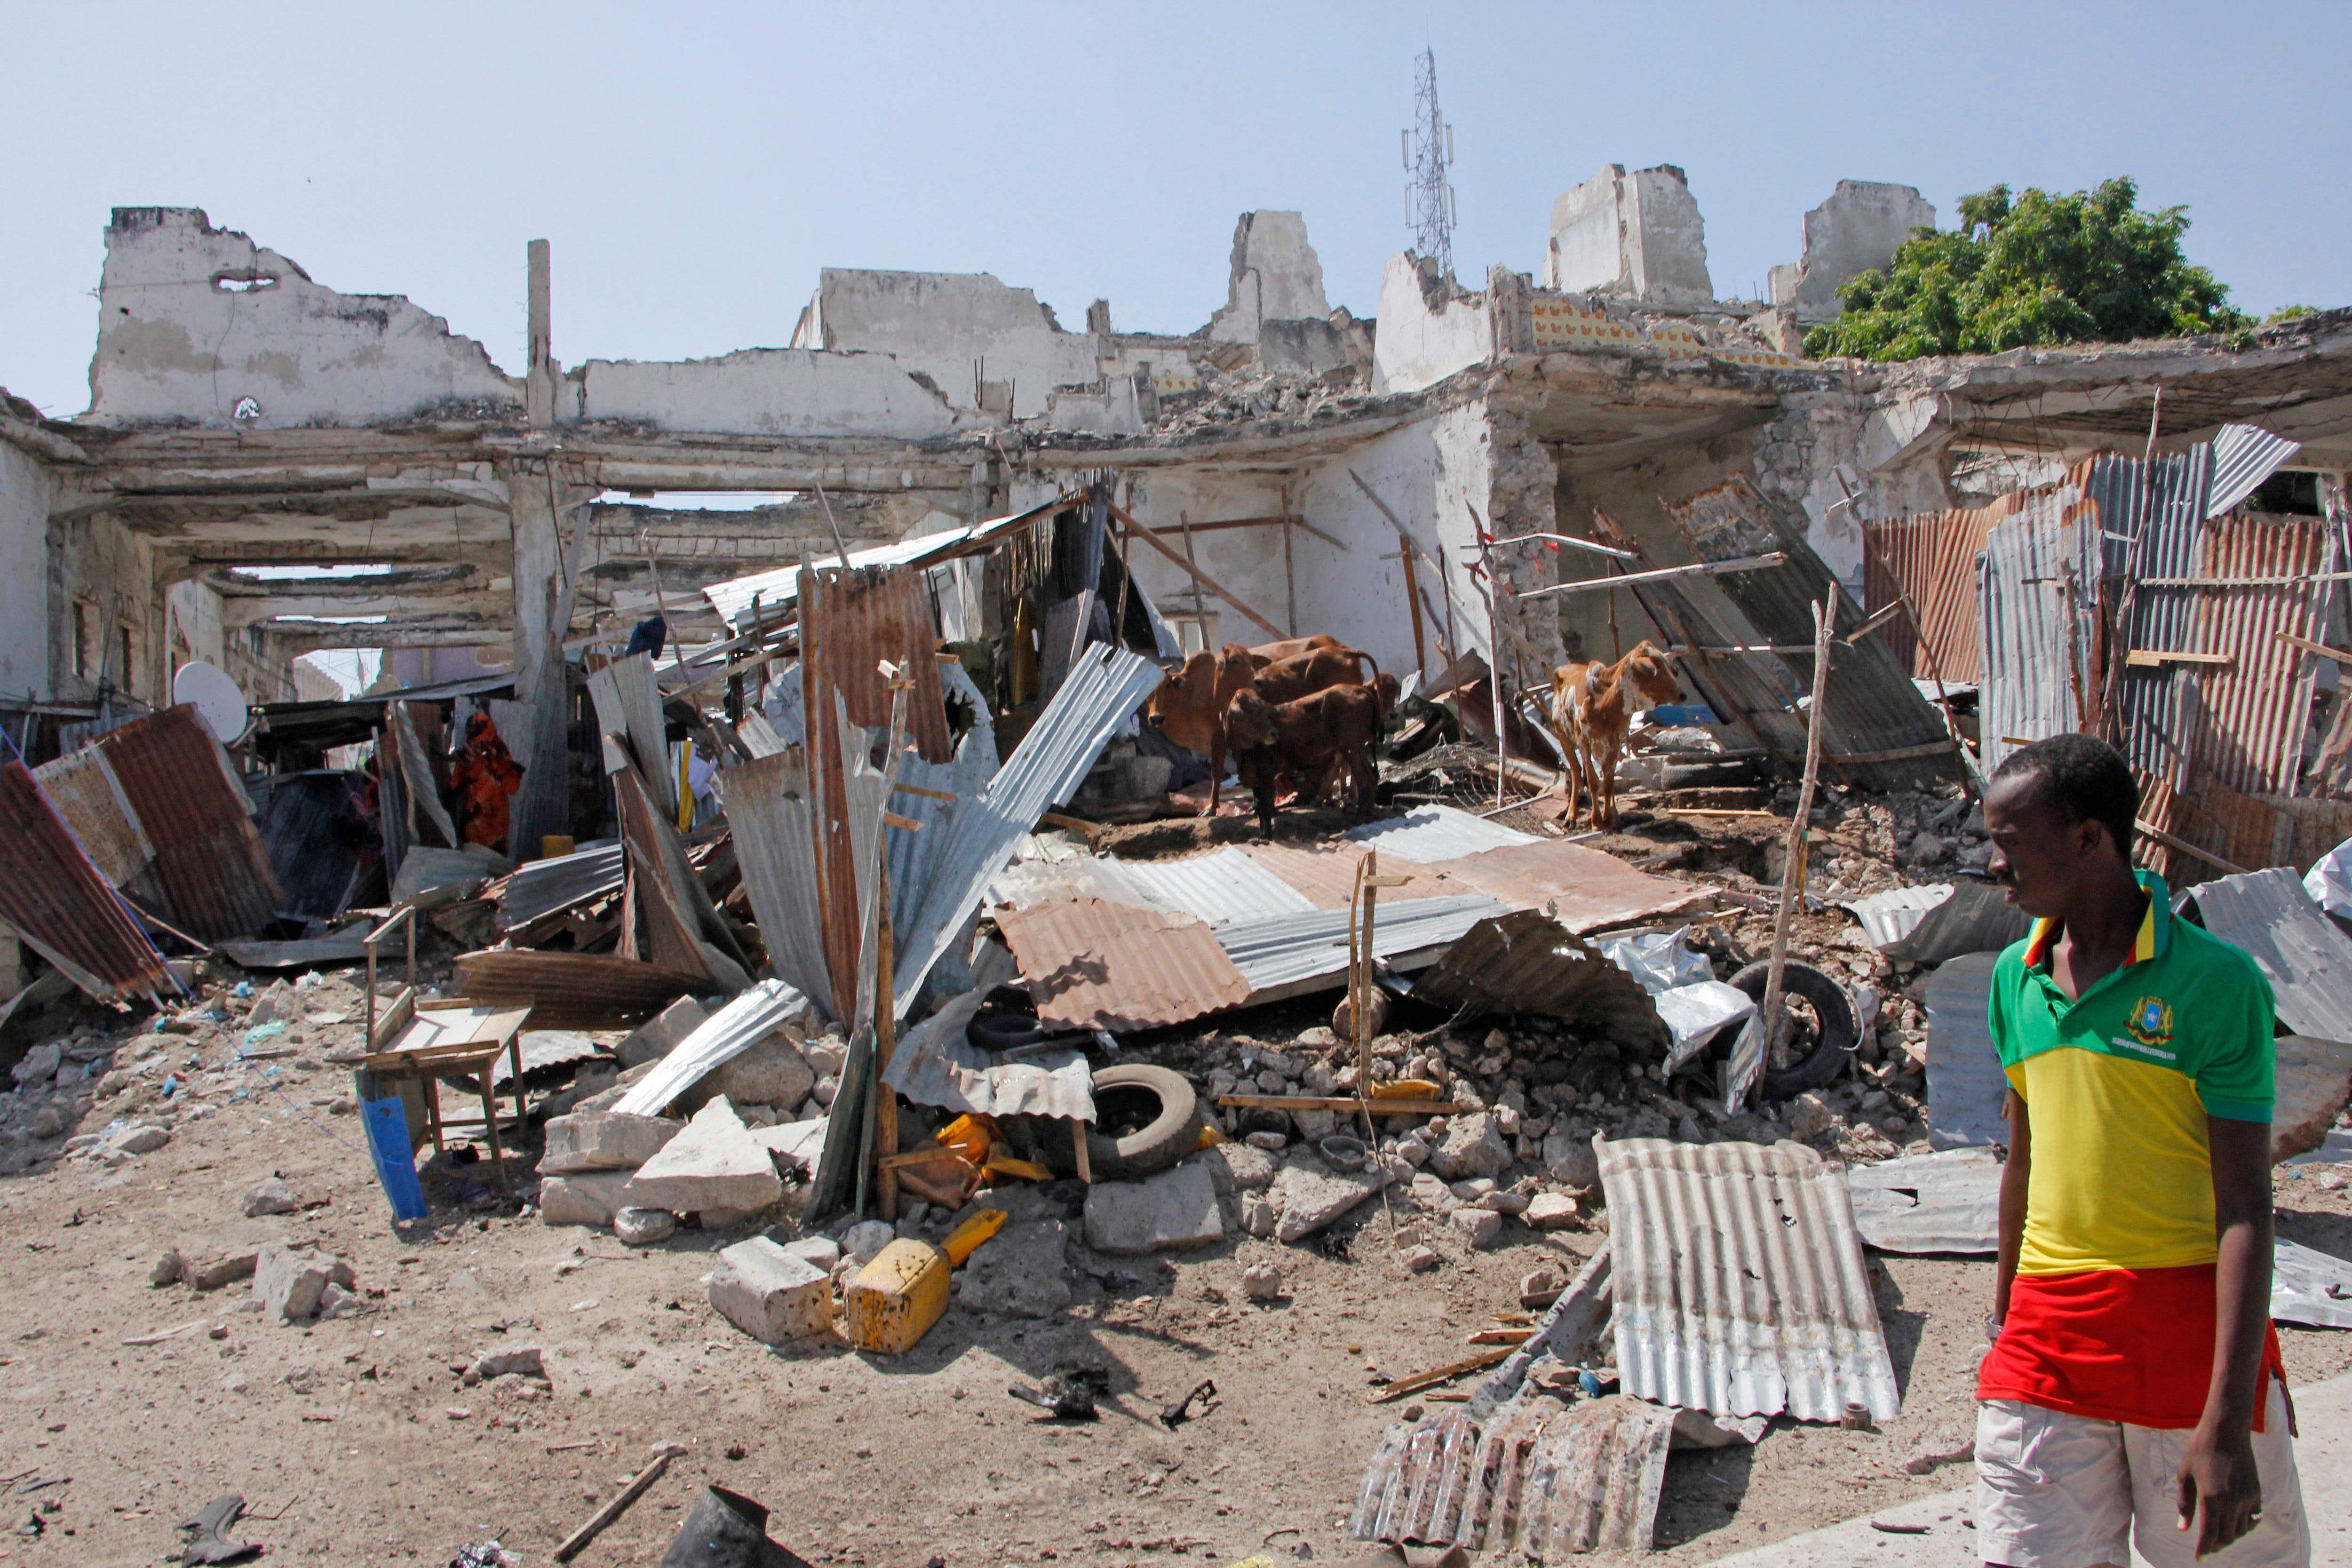 Coche bomba explota en Somalia y deja al menos 16 muertos